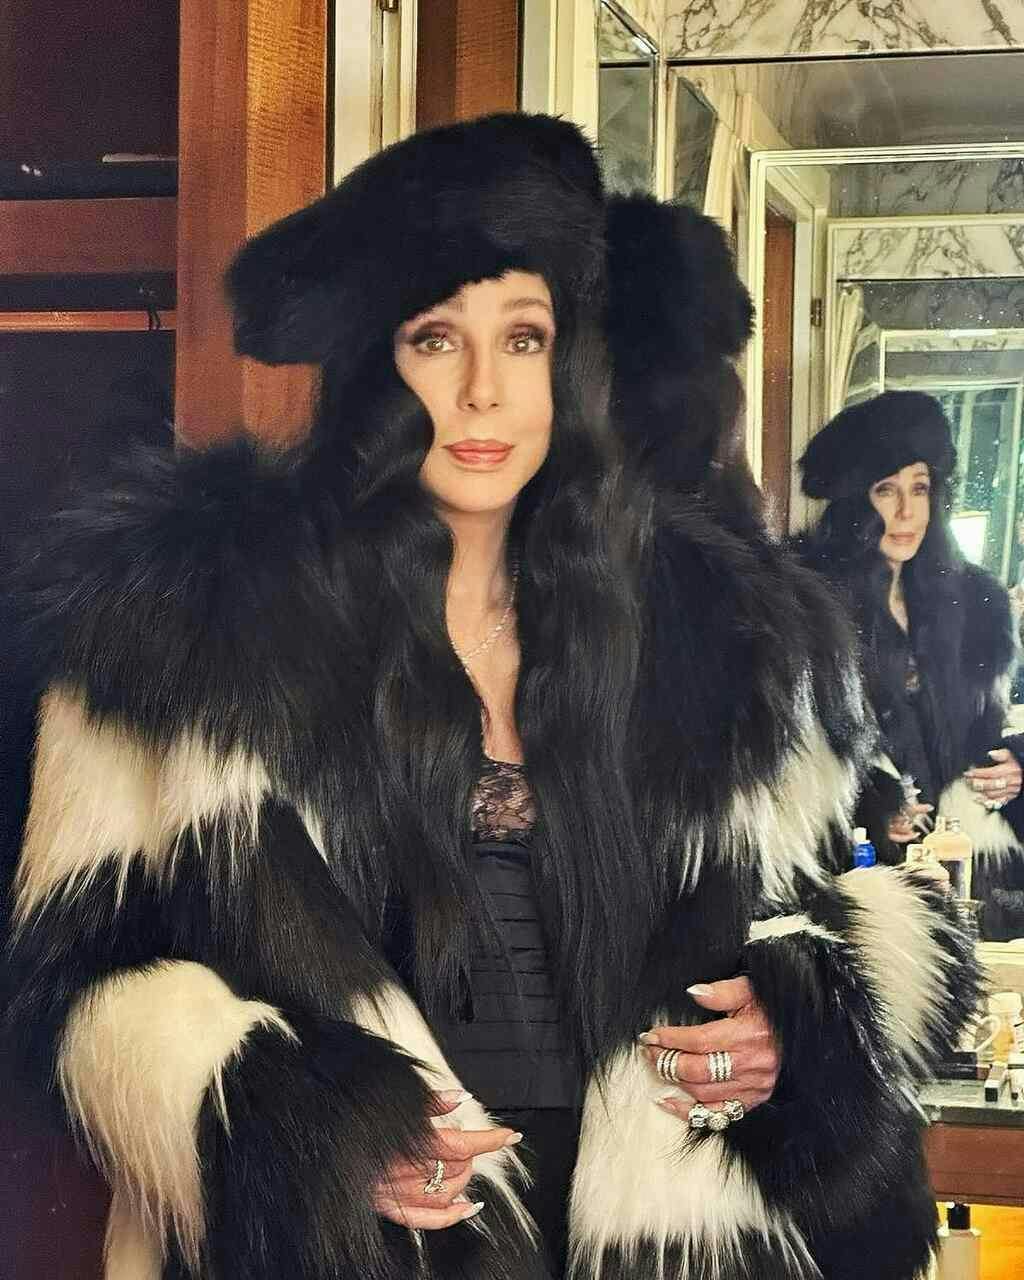 clothing coat adult female person woman fur face photography portrait